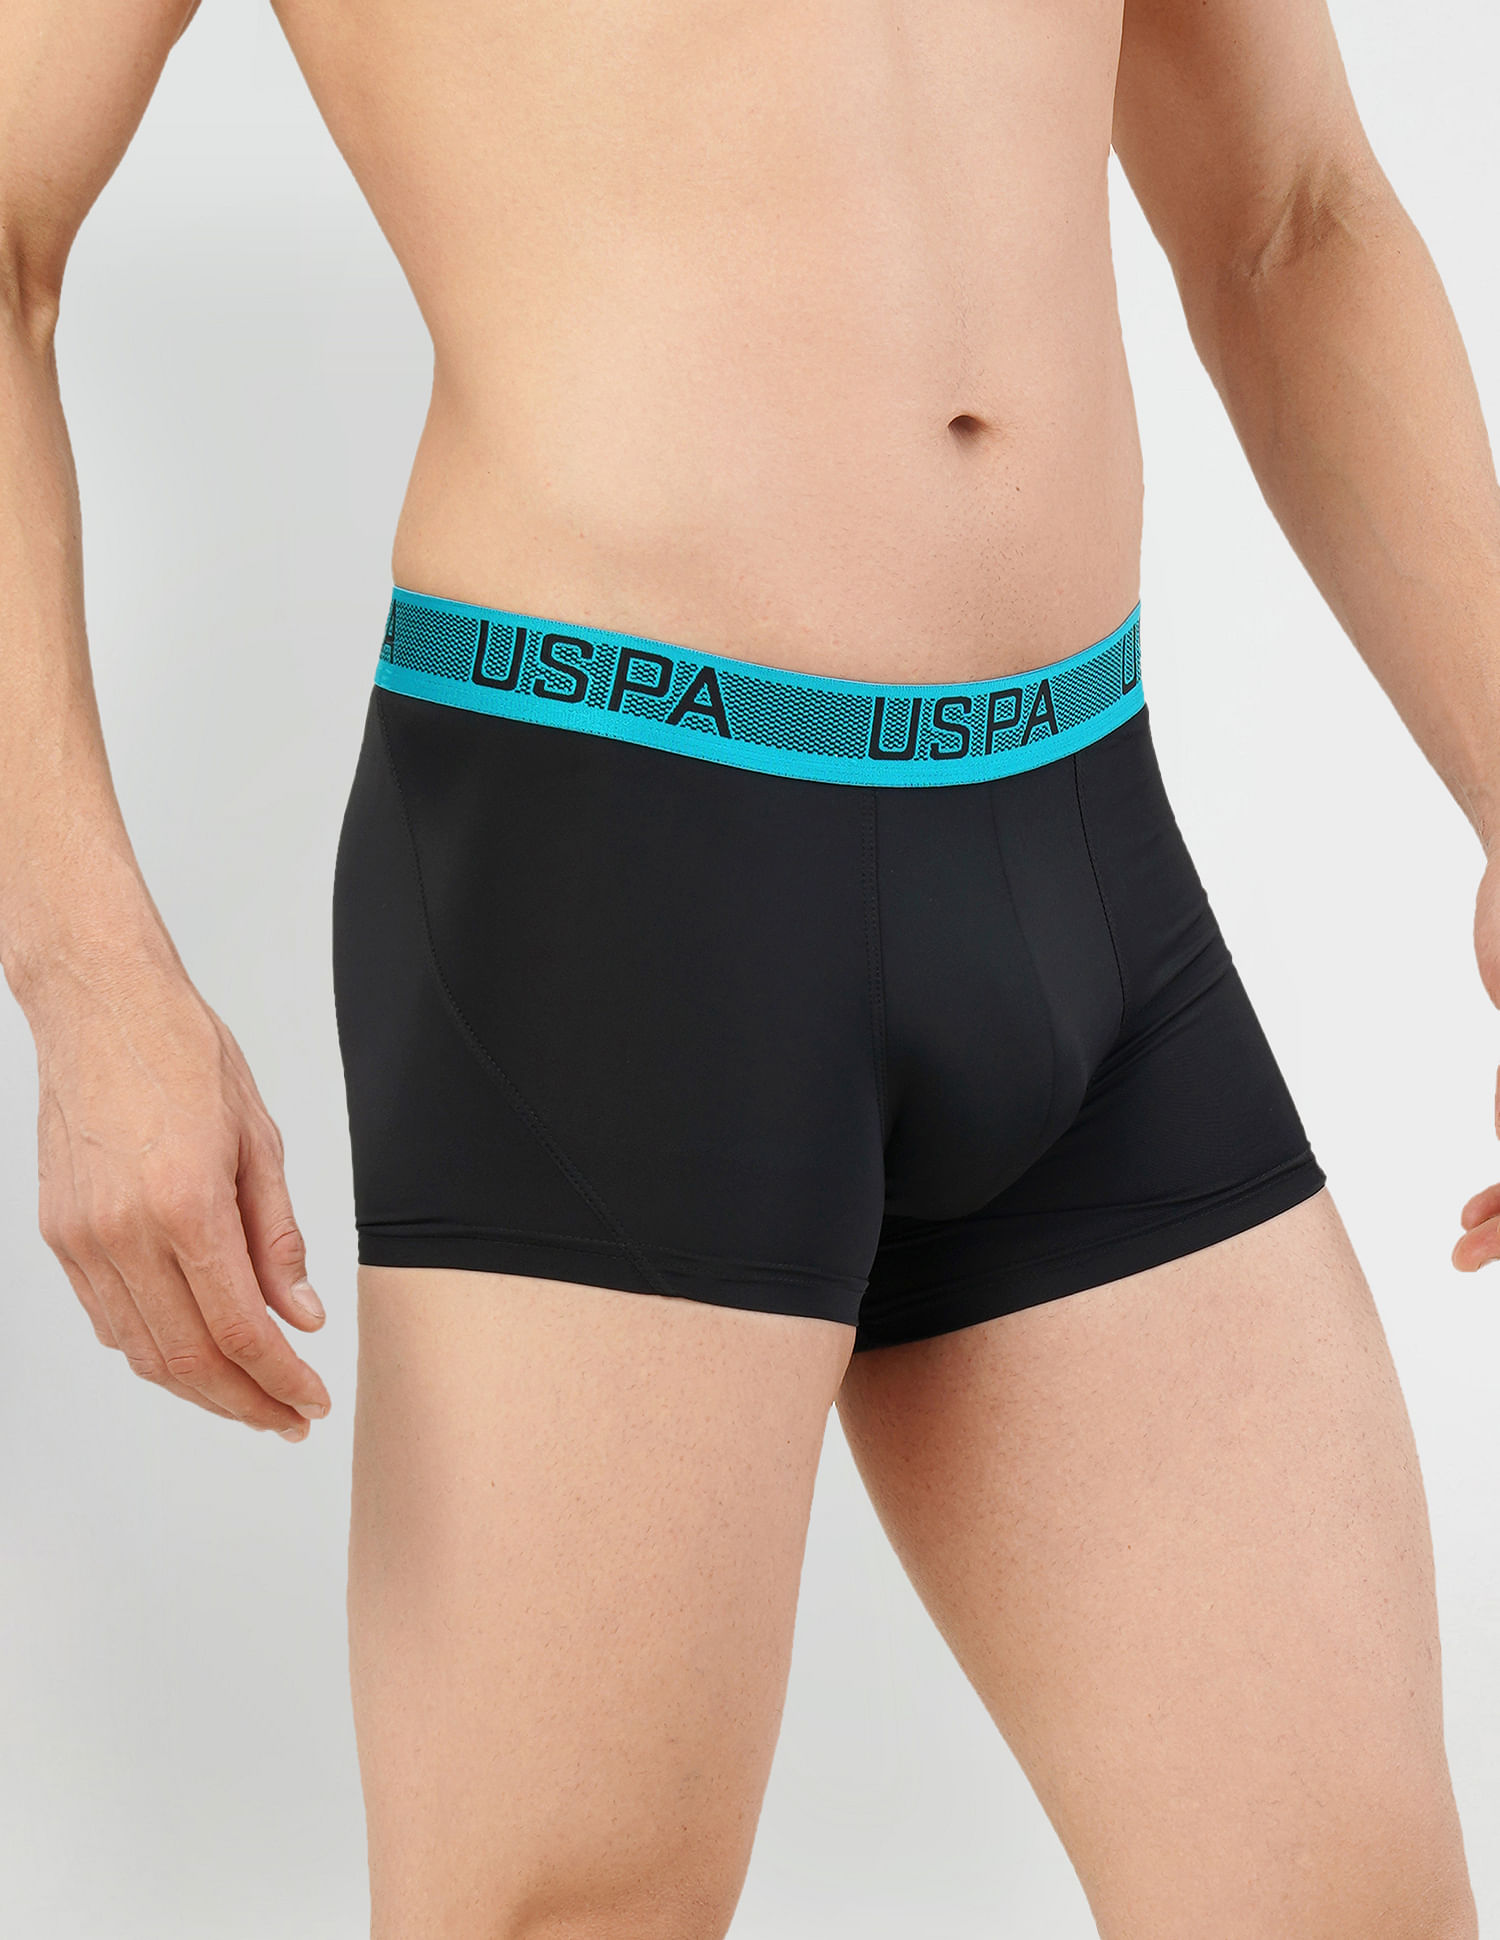 Buy Nylon Spandex Underwear online